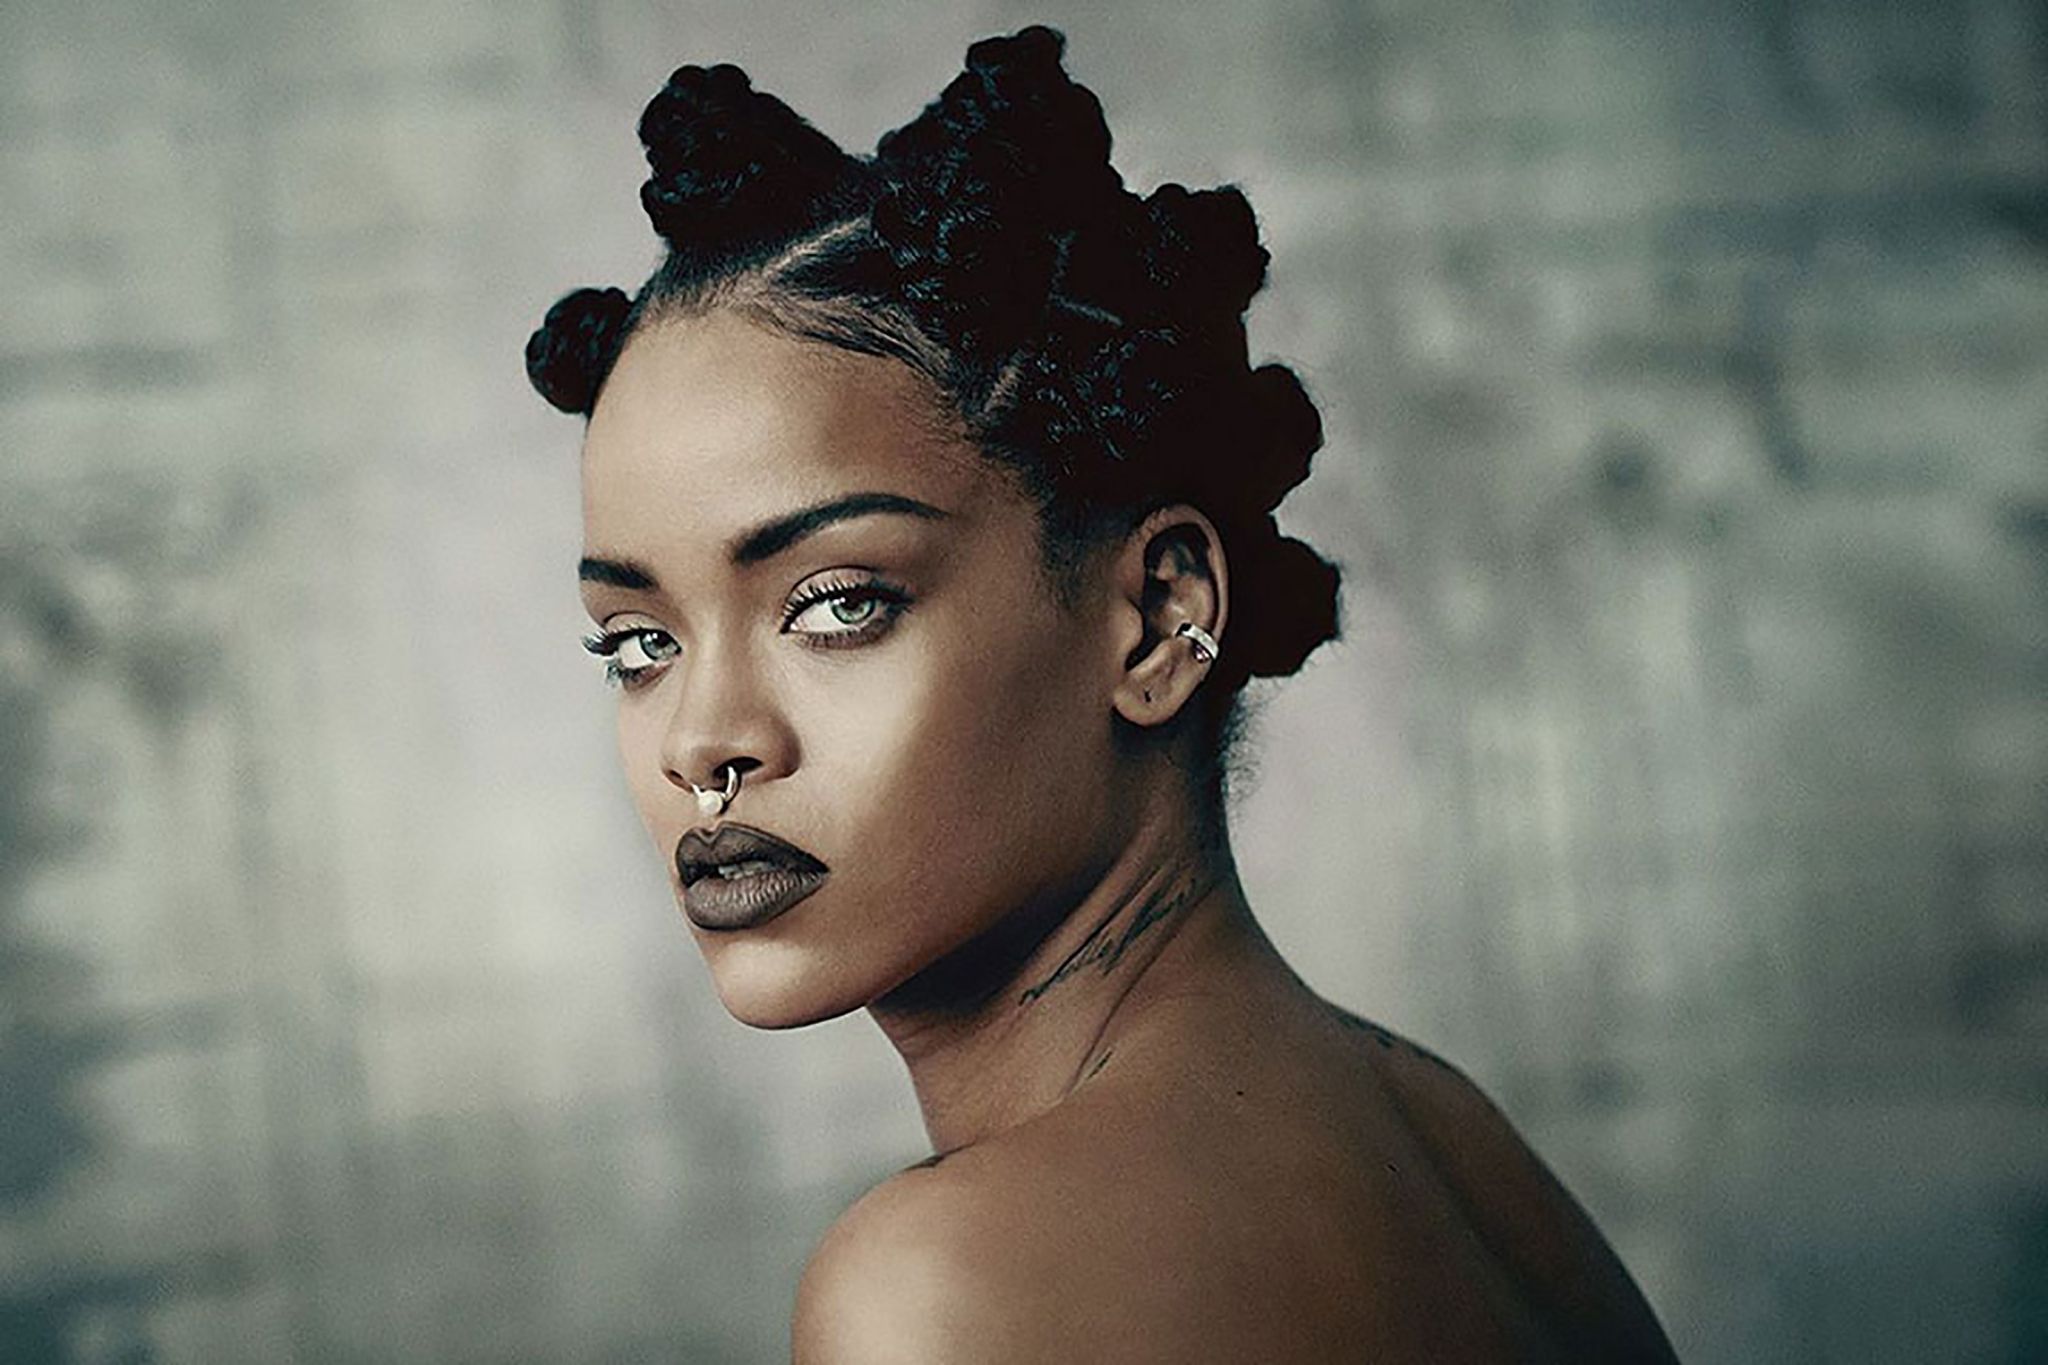 Rihanna 2017 Wallpapers